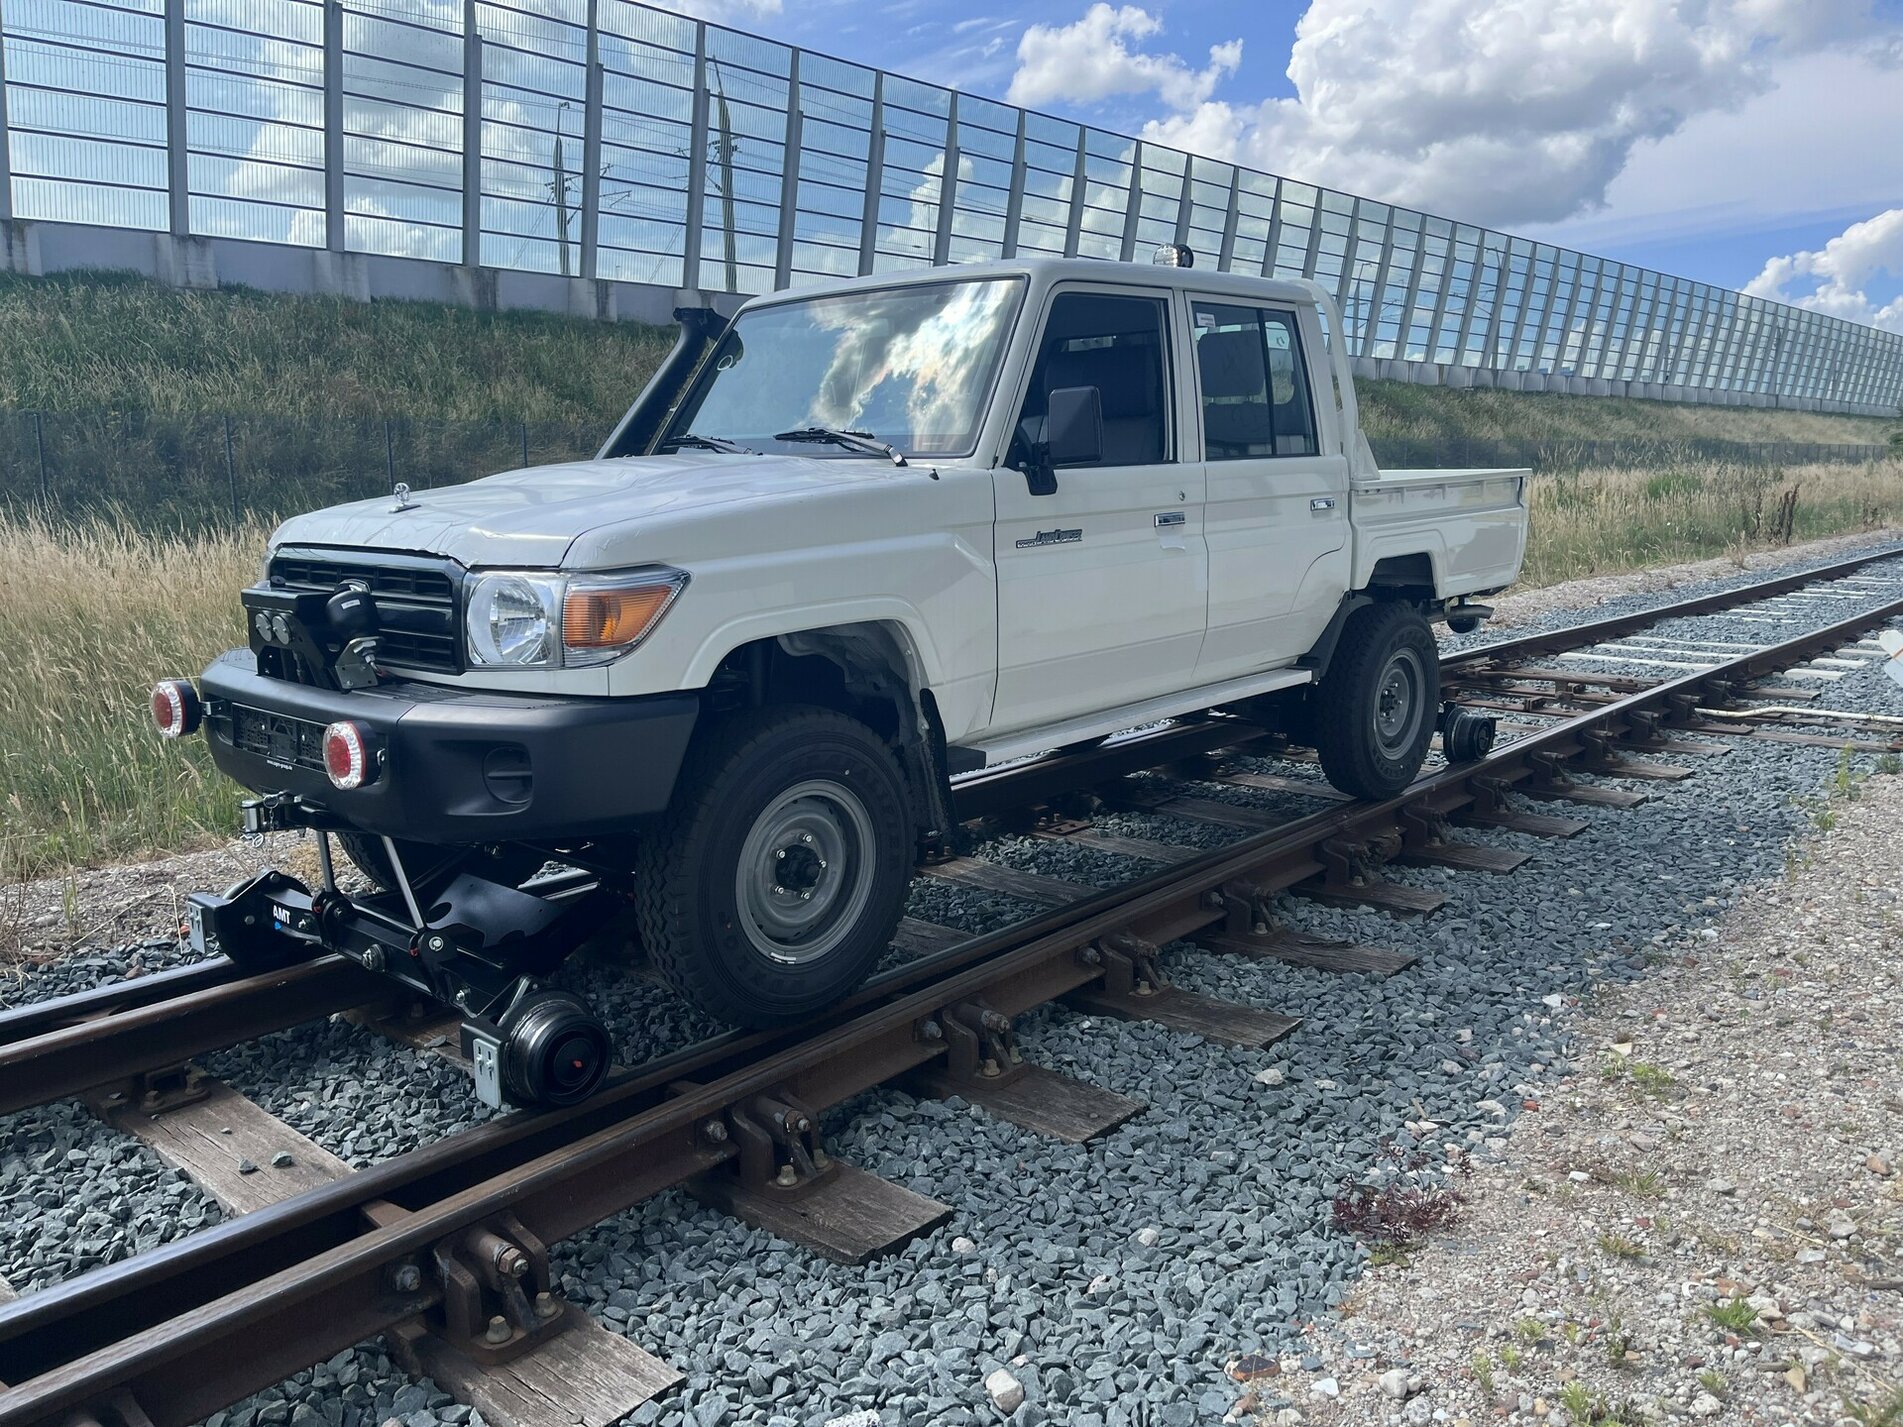 Toyota-Landcruiser-rail-inspection-service-vehicle